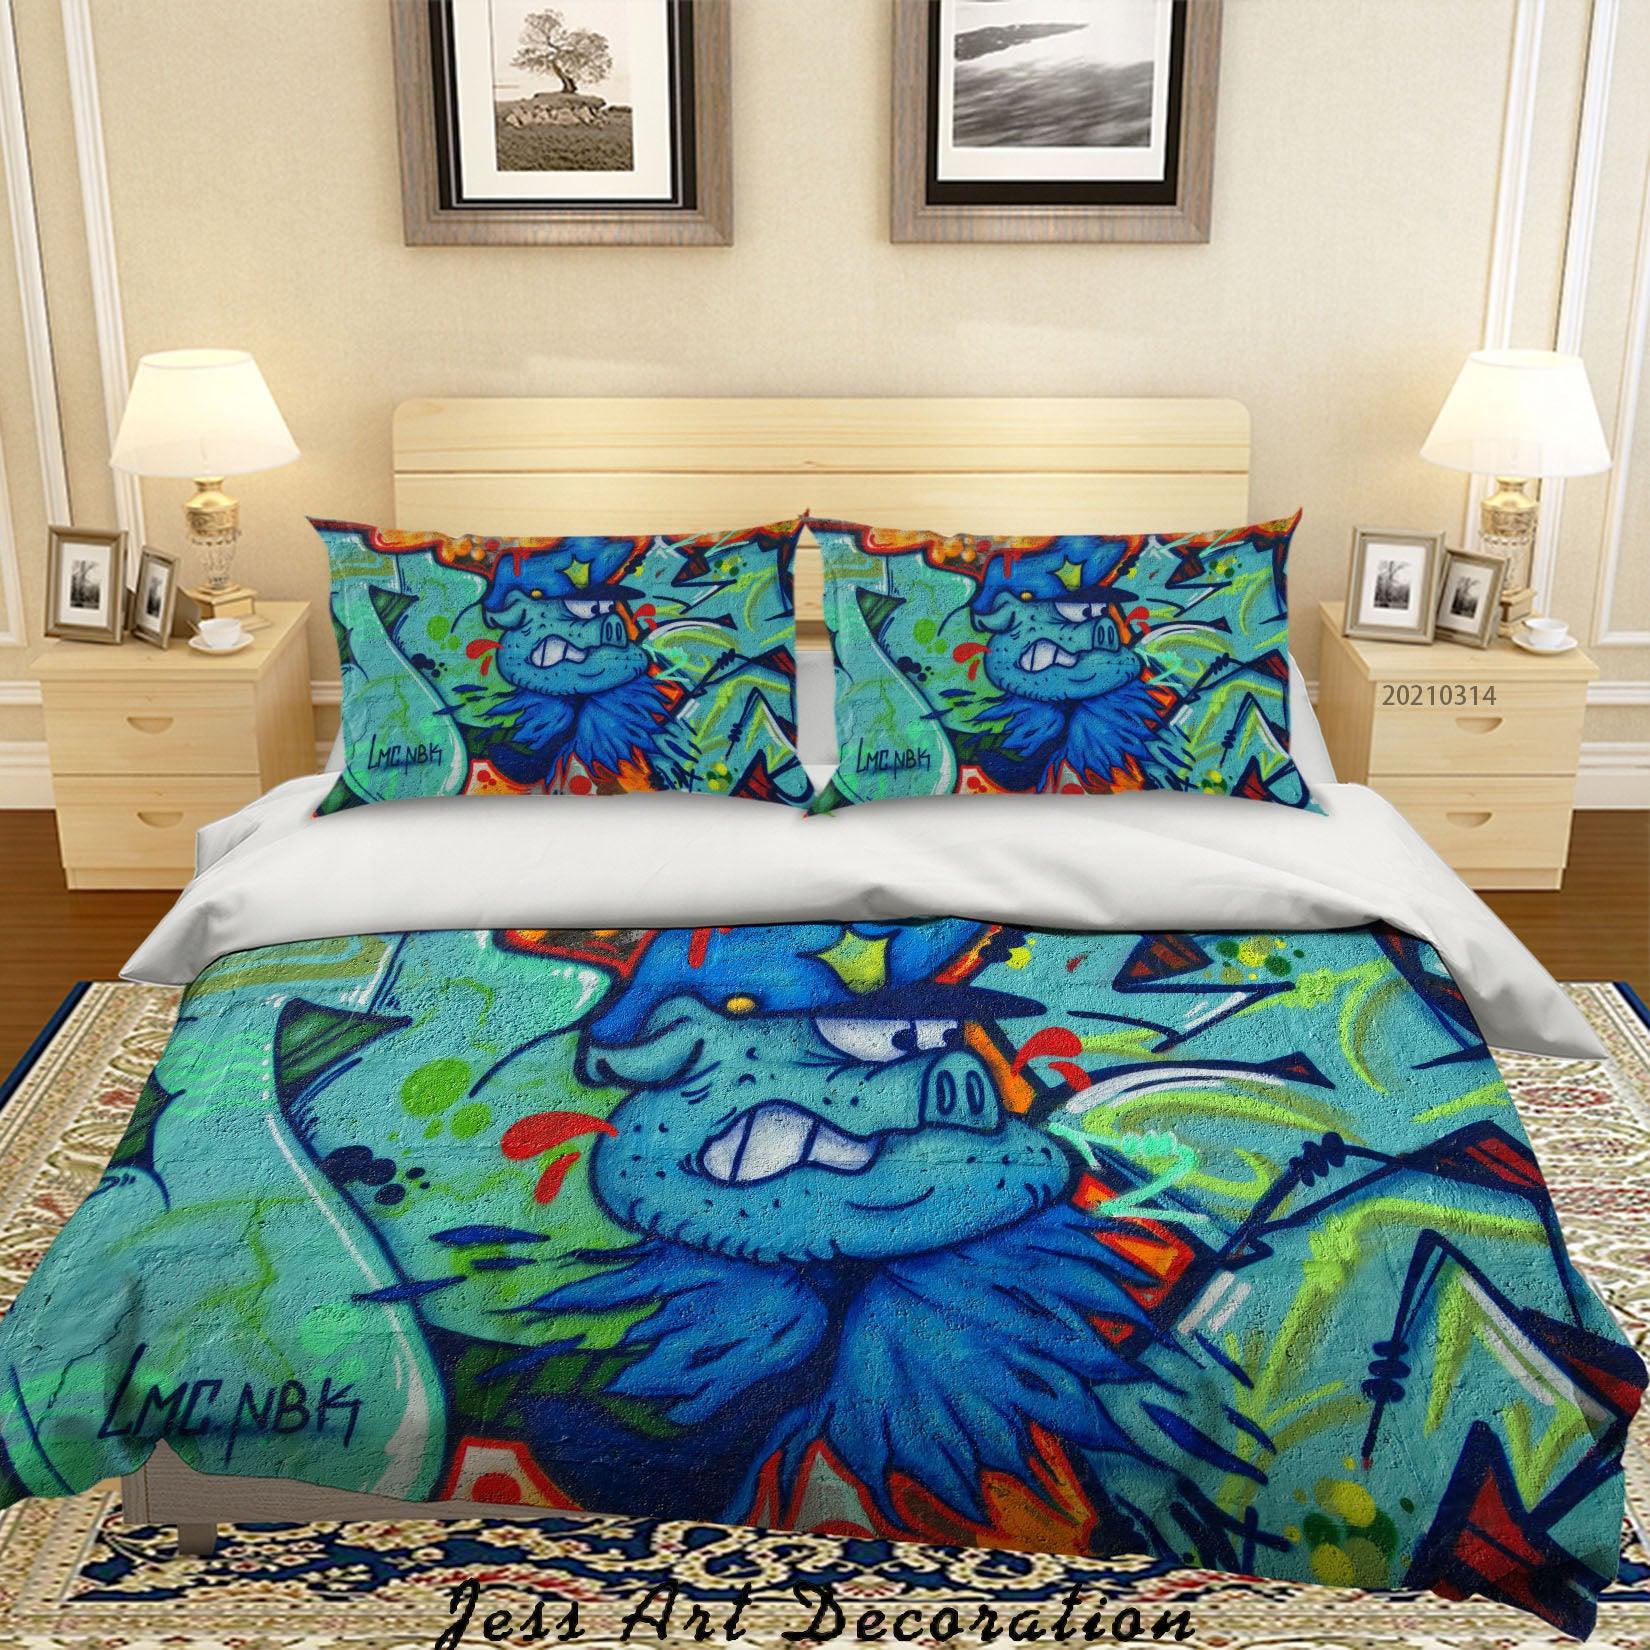 3D Abstract Colored Graffiti Monster Quilt Cover Set Bedding Set Duvet Cover Pillowcases 179- Jess Art Decoration